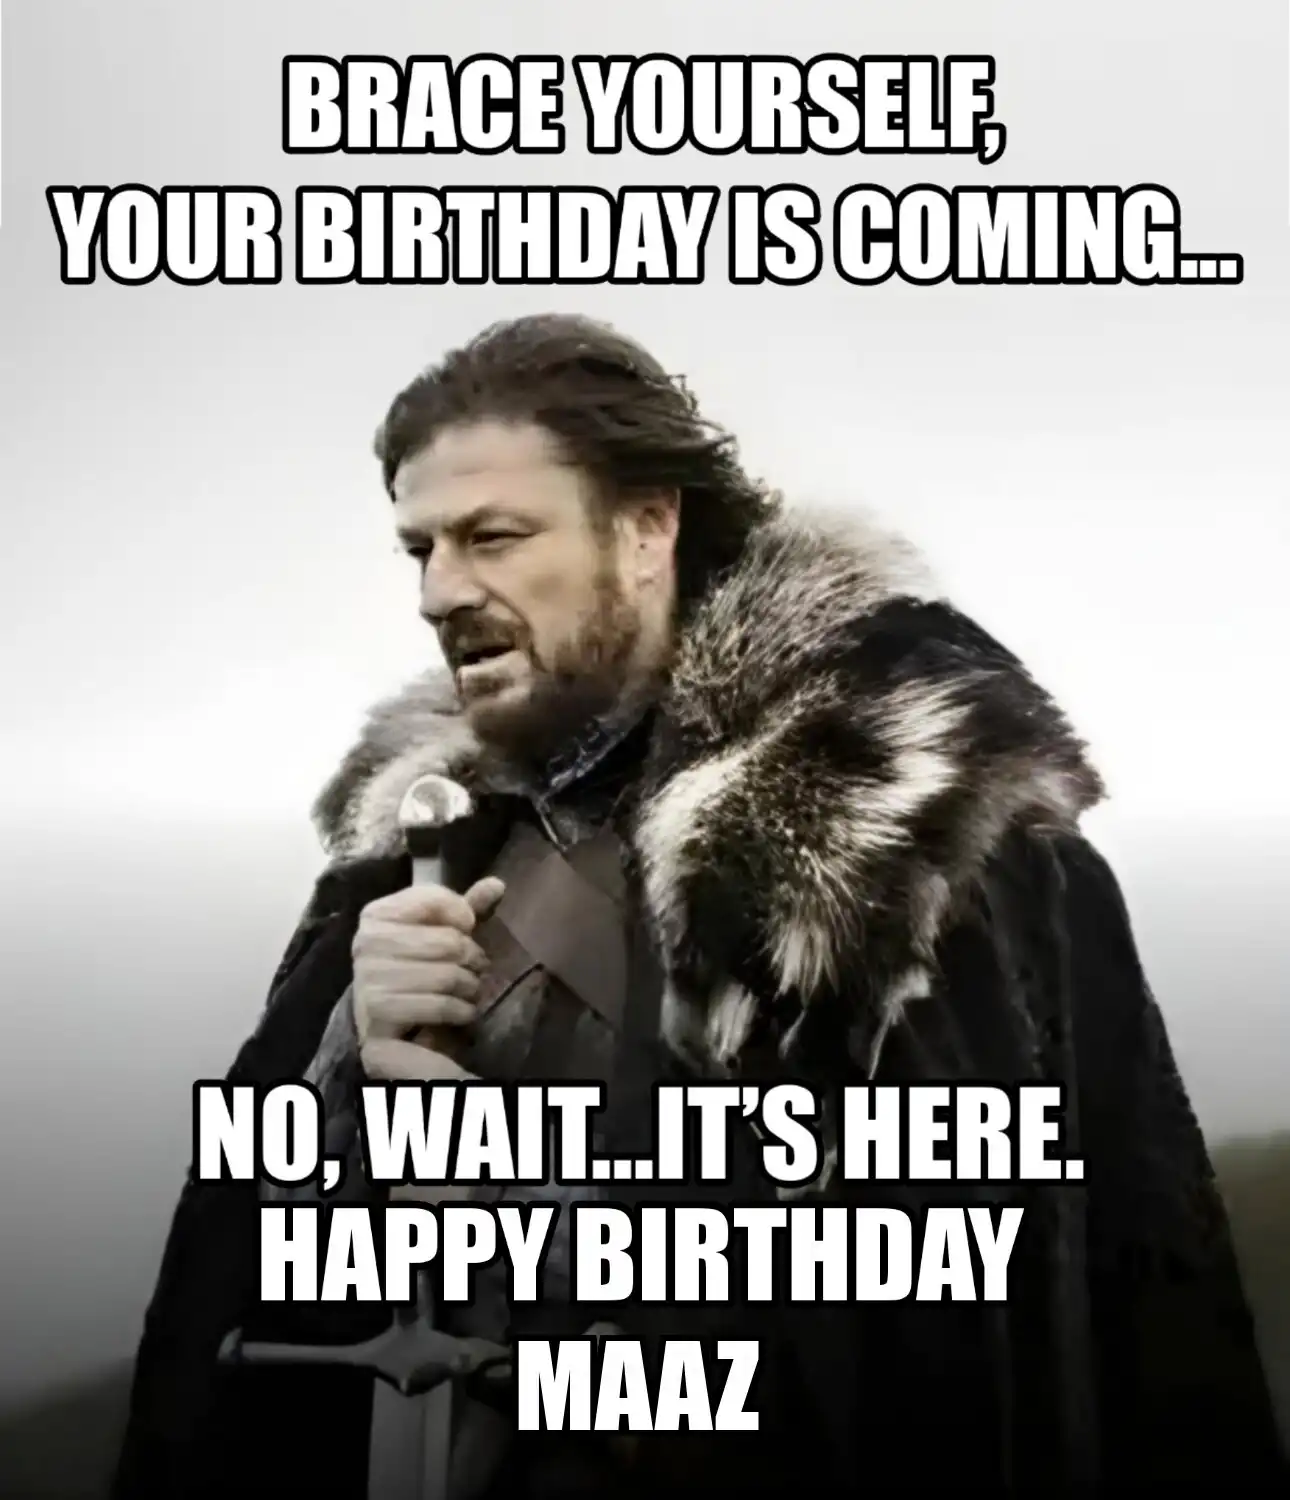 Happy Birthday Maaz Brace Yourself Your Birthday Is Coming Meme